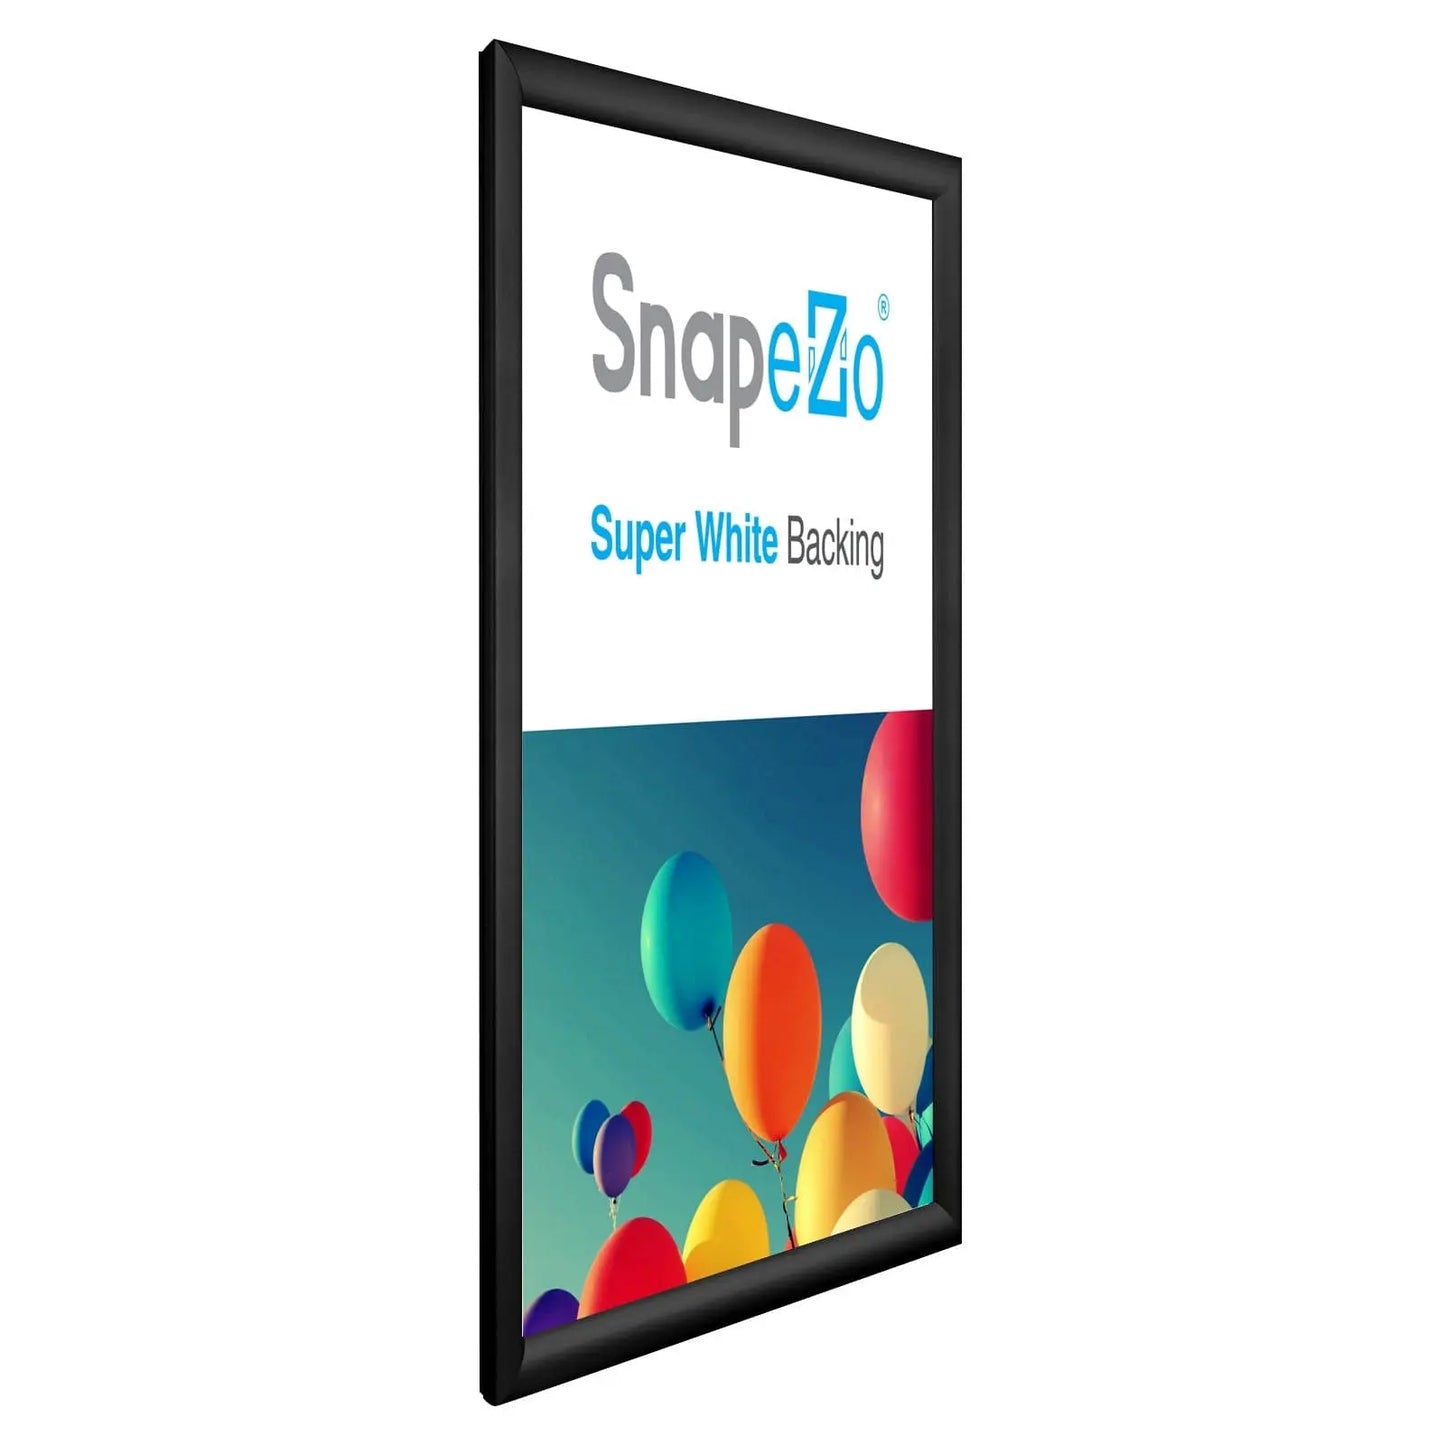 18x24 Black SnapeZo® Snap Frame - 1.2" Profile - Snap Frames Direct